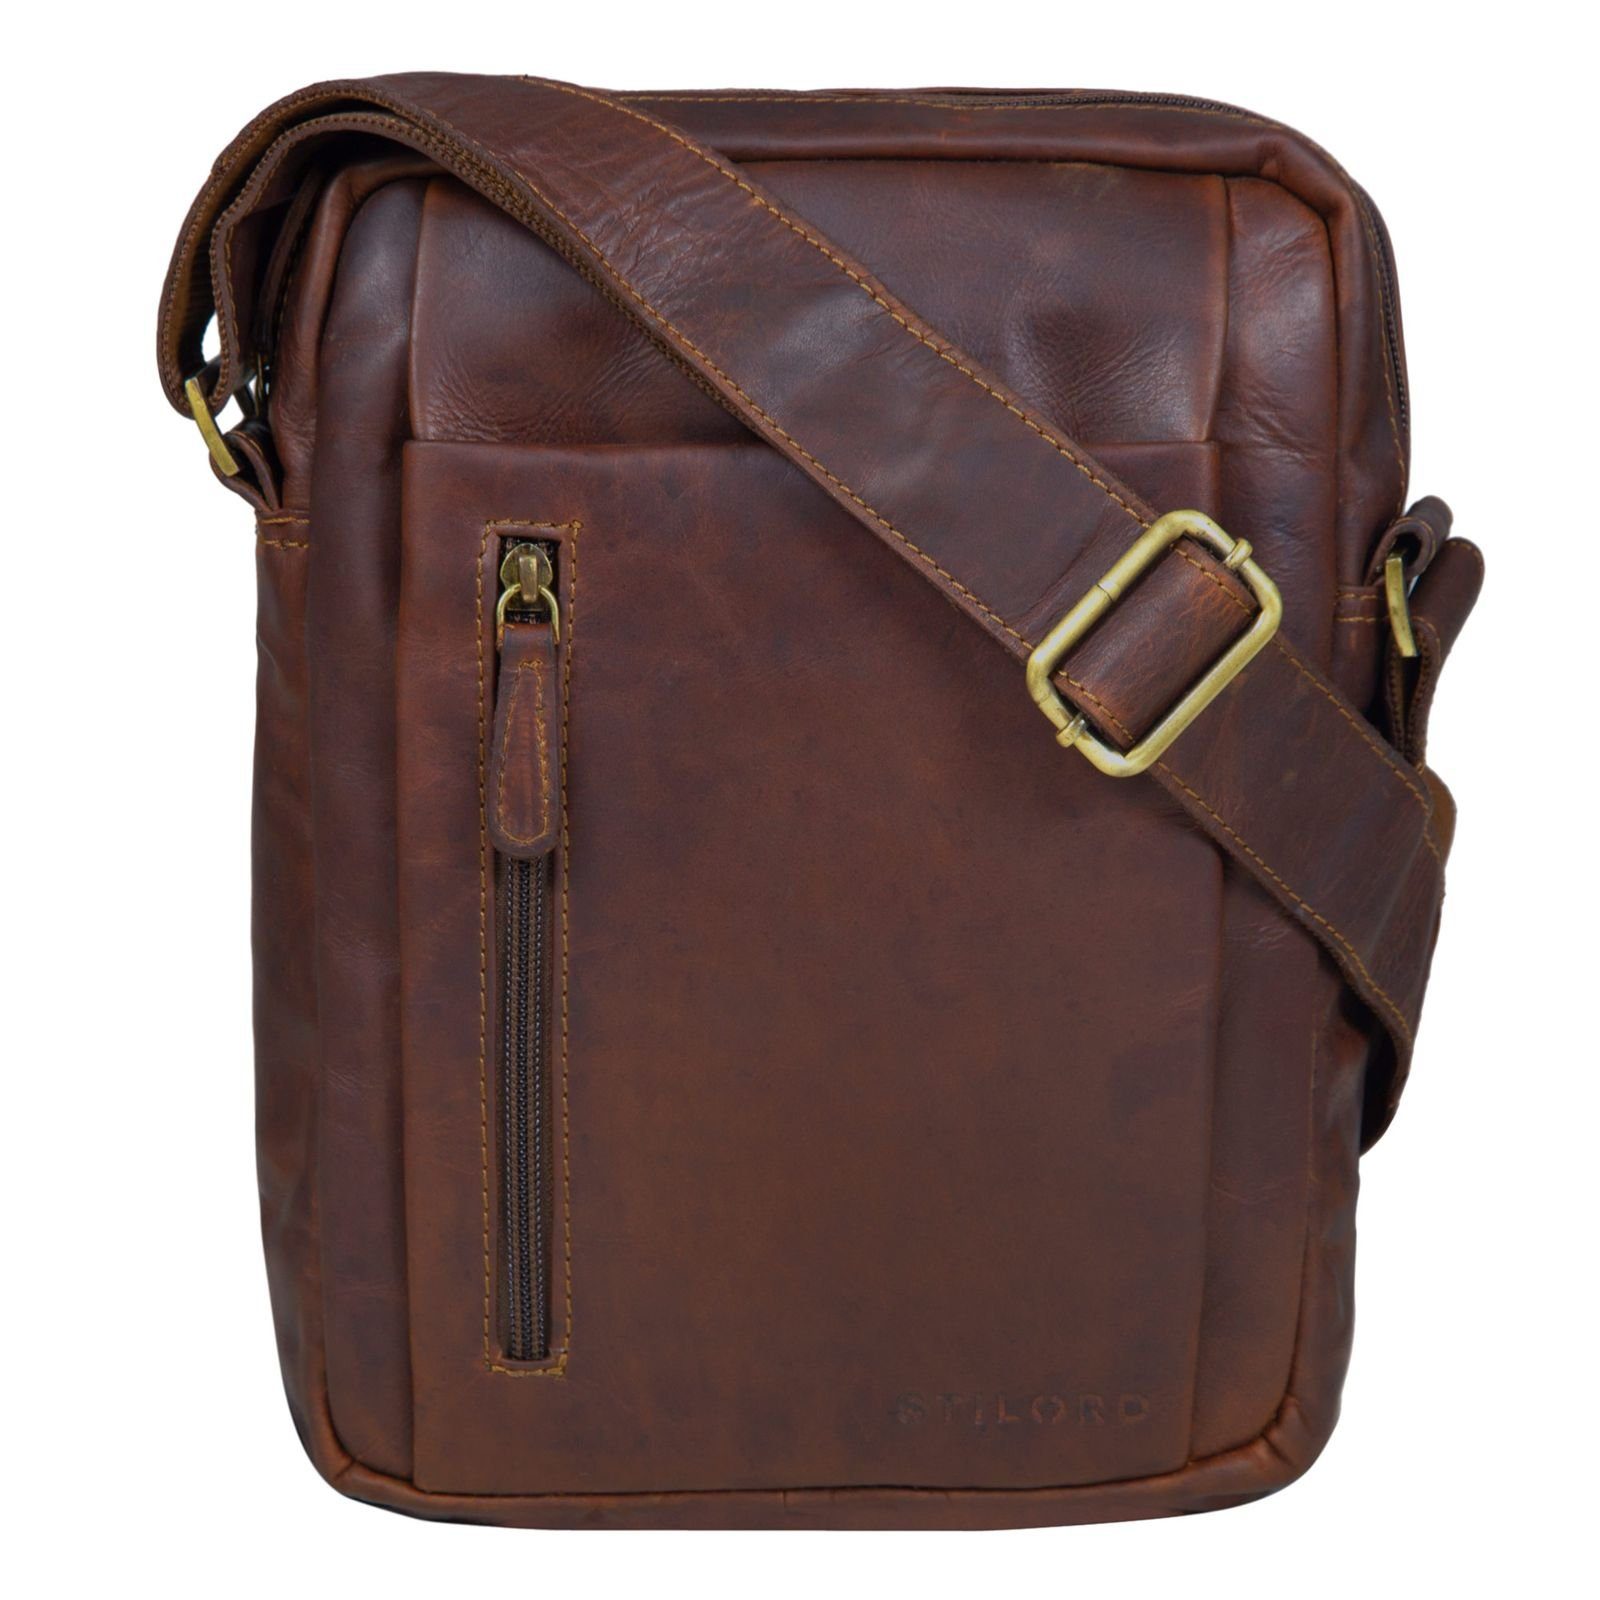 STILORD Messenger Bag "Irving" Vintage Leder Tasche Klein cognac - dunkelbraun